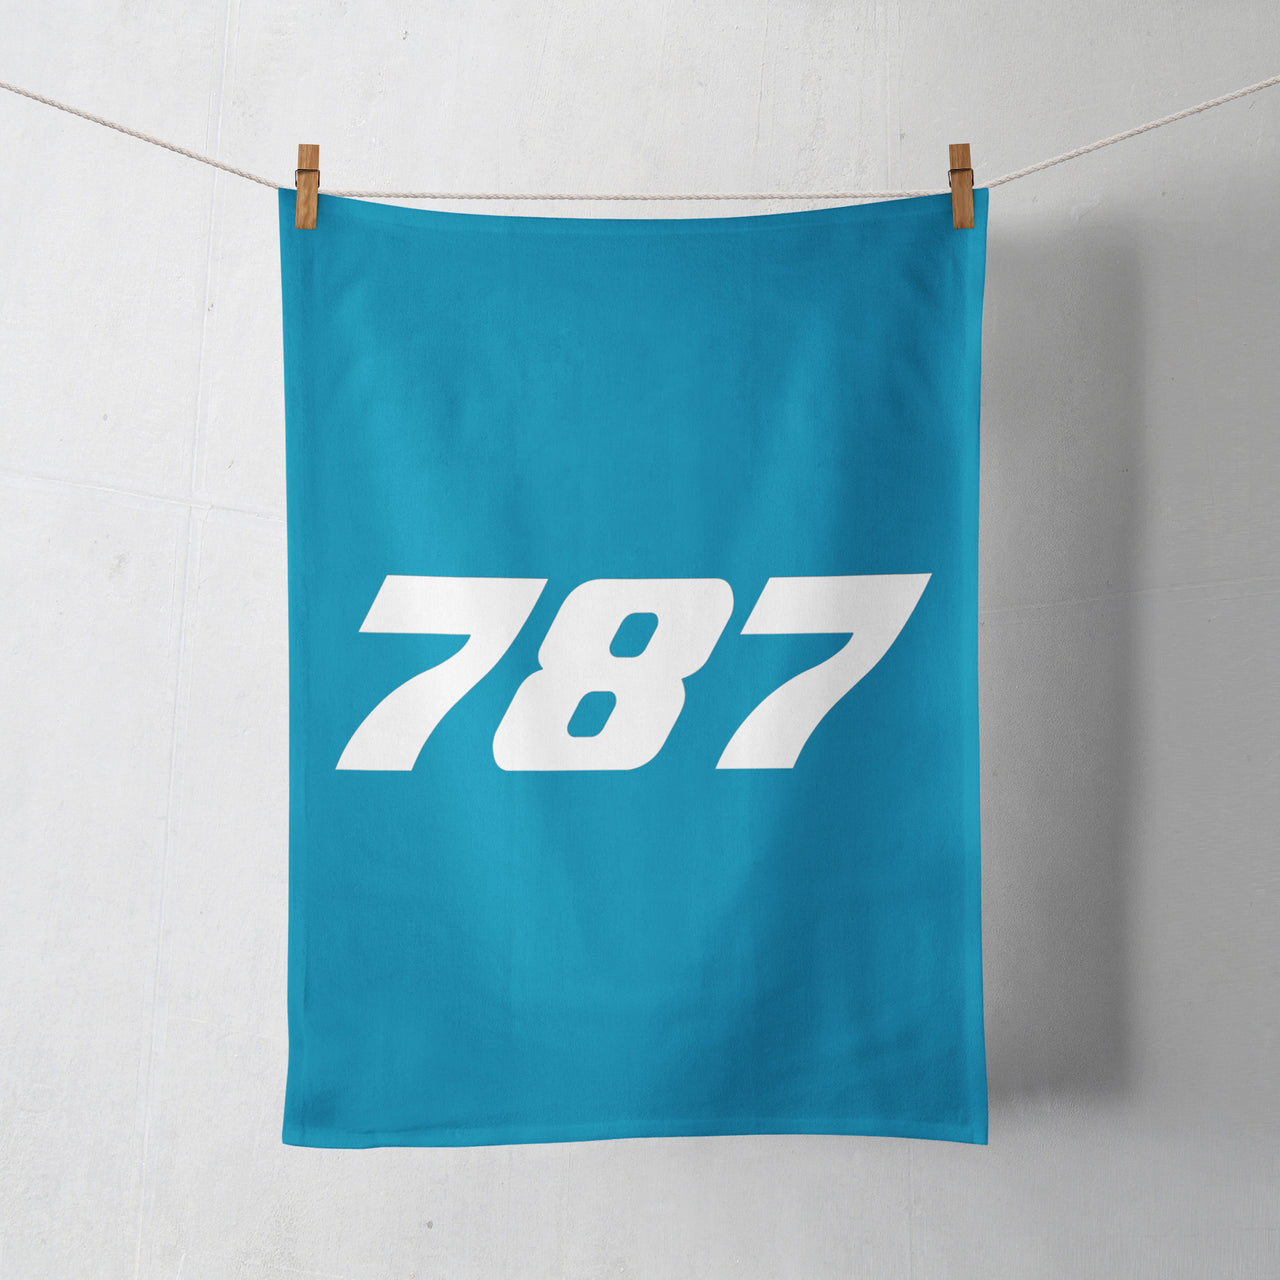 787 Flat Text Designed Towels